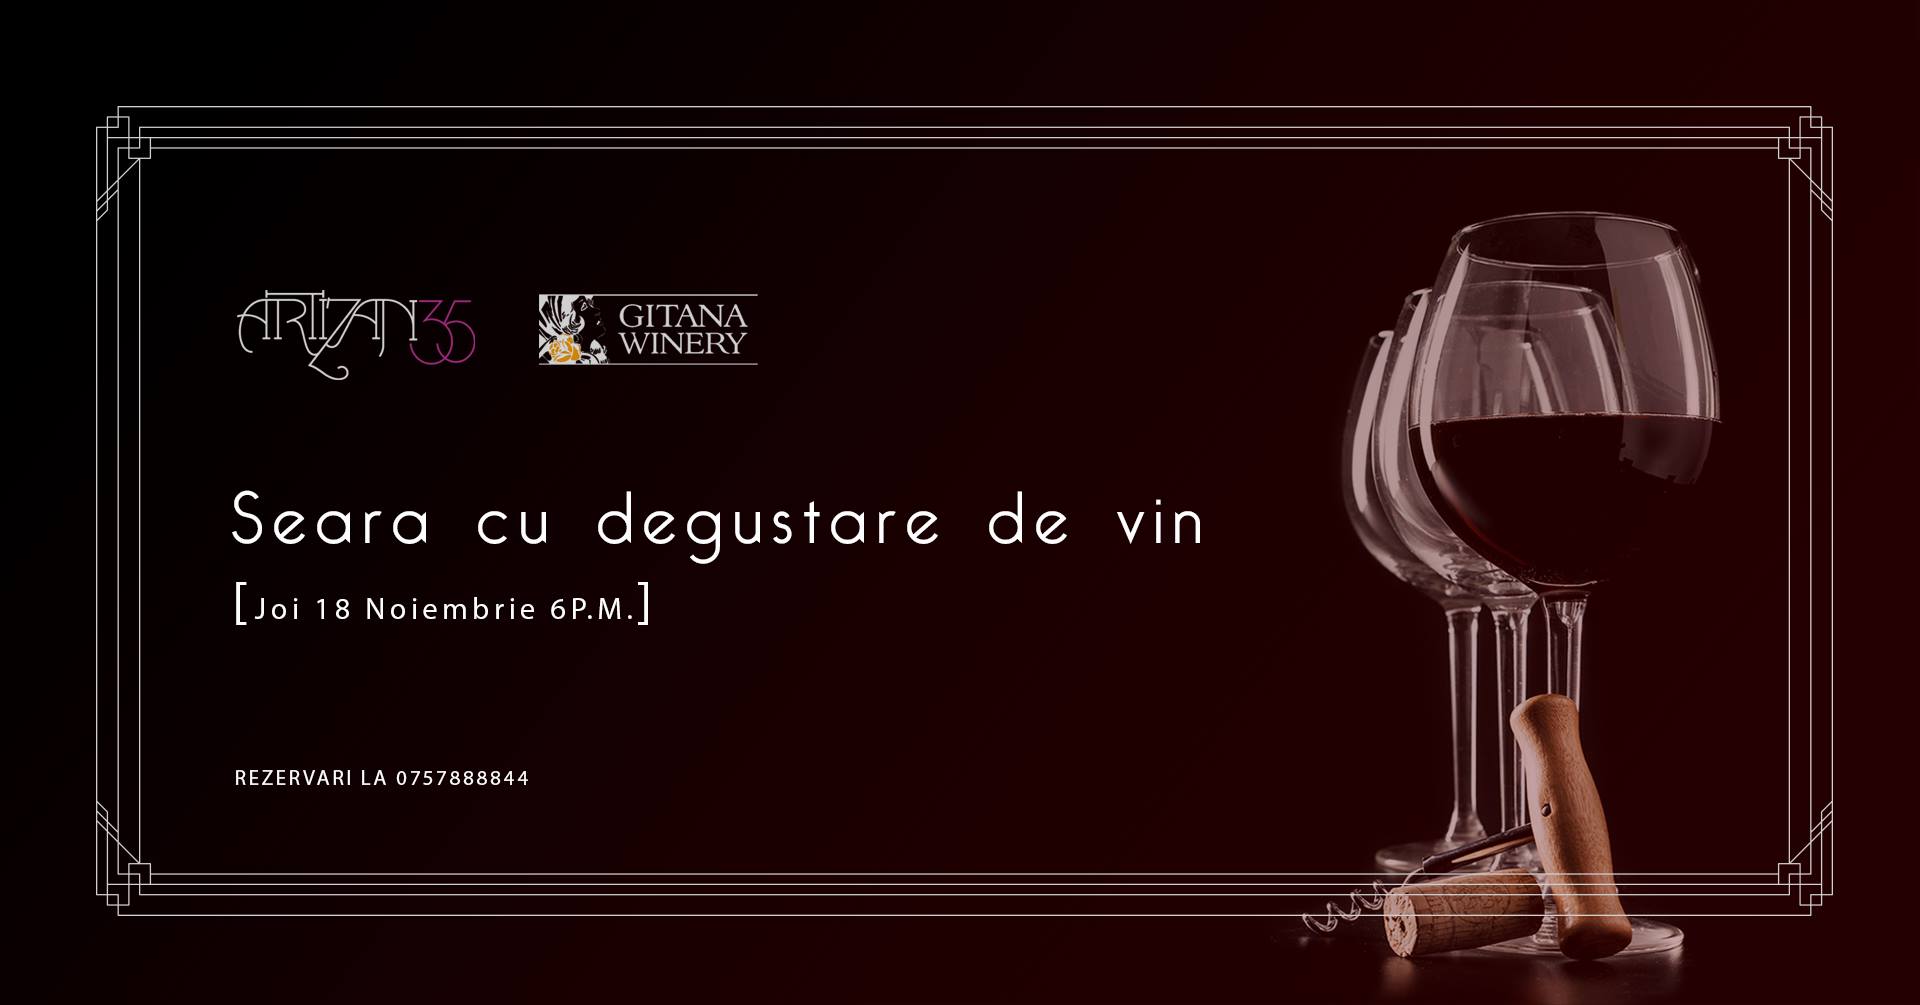 Seara cu degustare de vin de la Gitana Winery